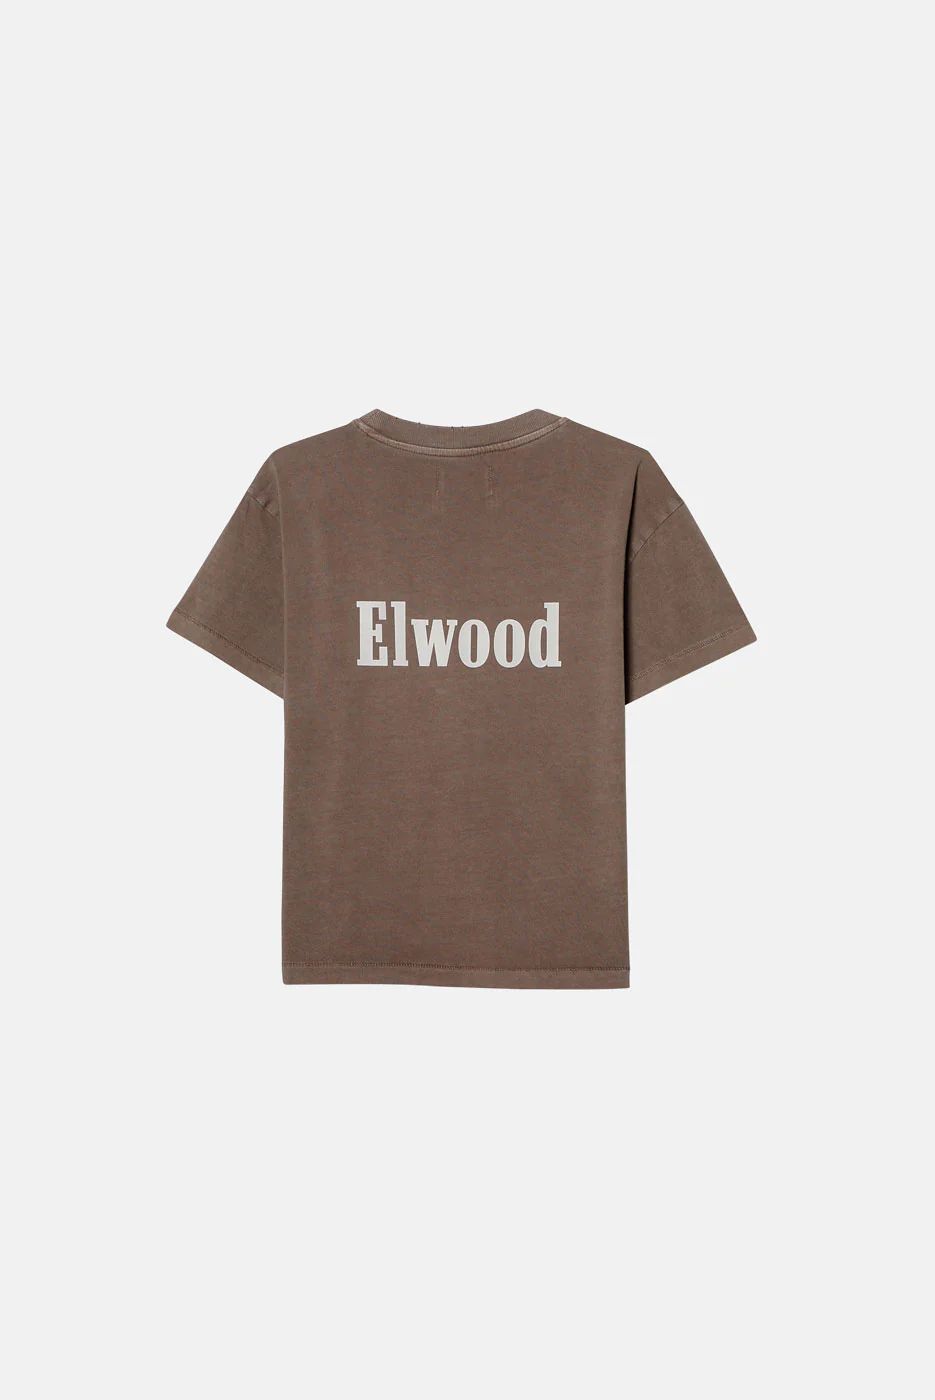 KIDS TRADEMARK TEE | Elwood Clothing